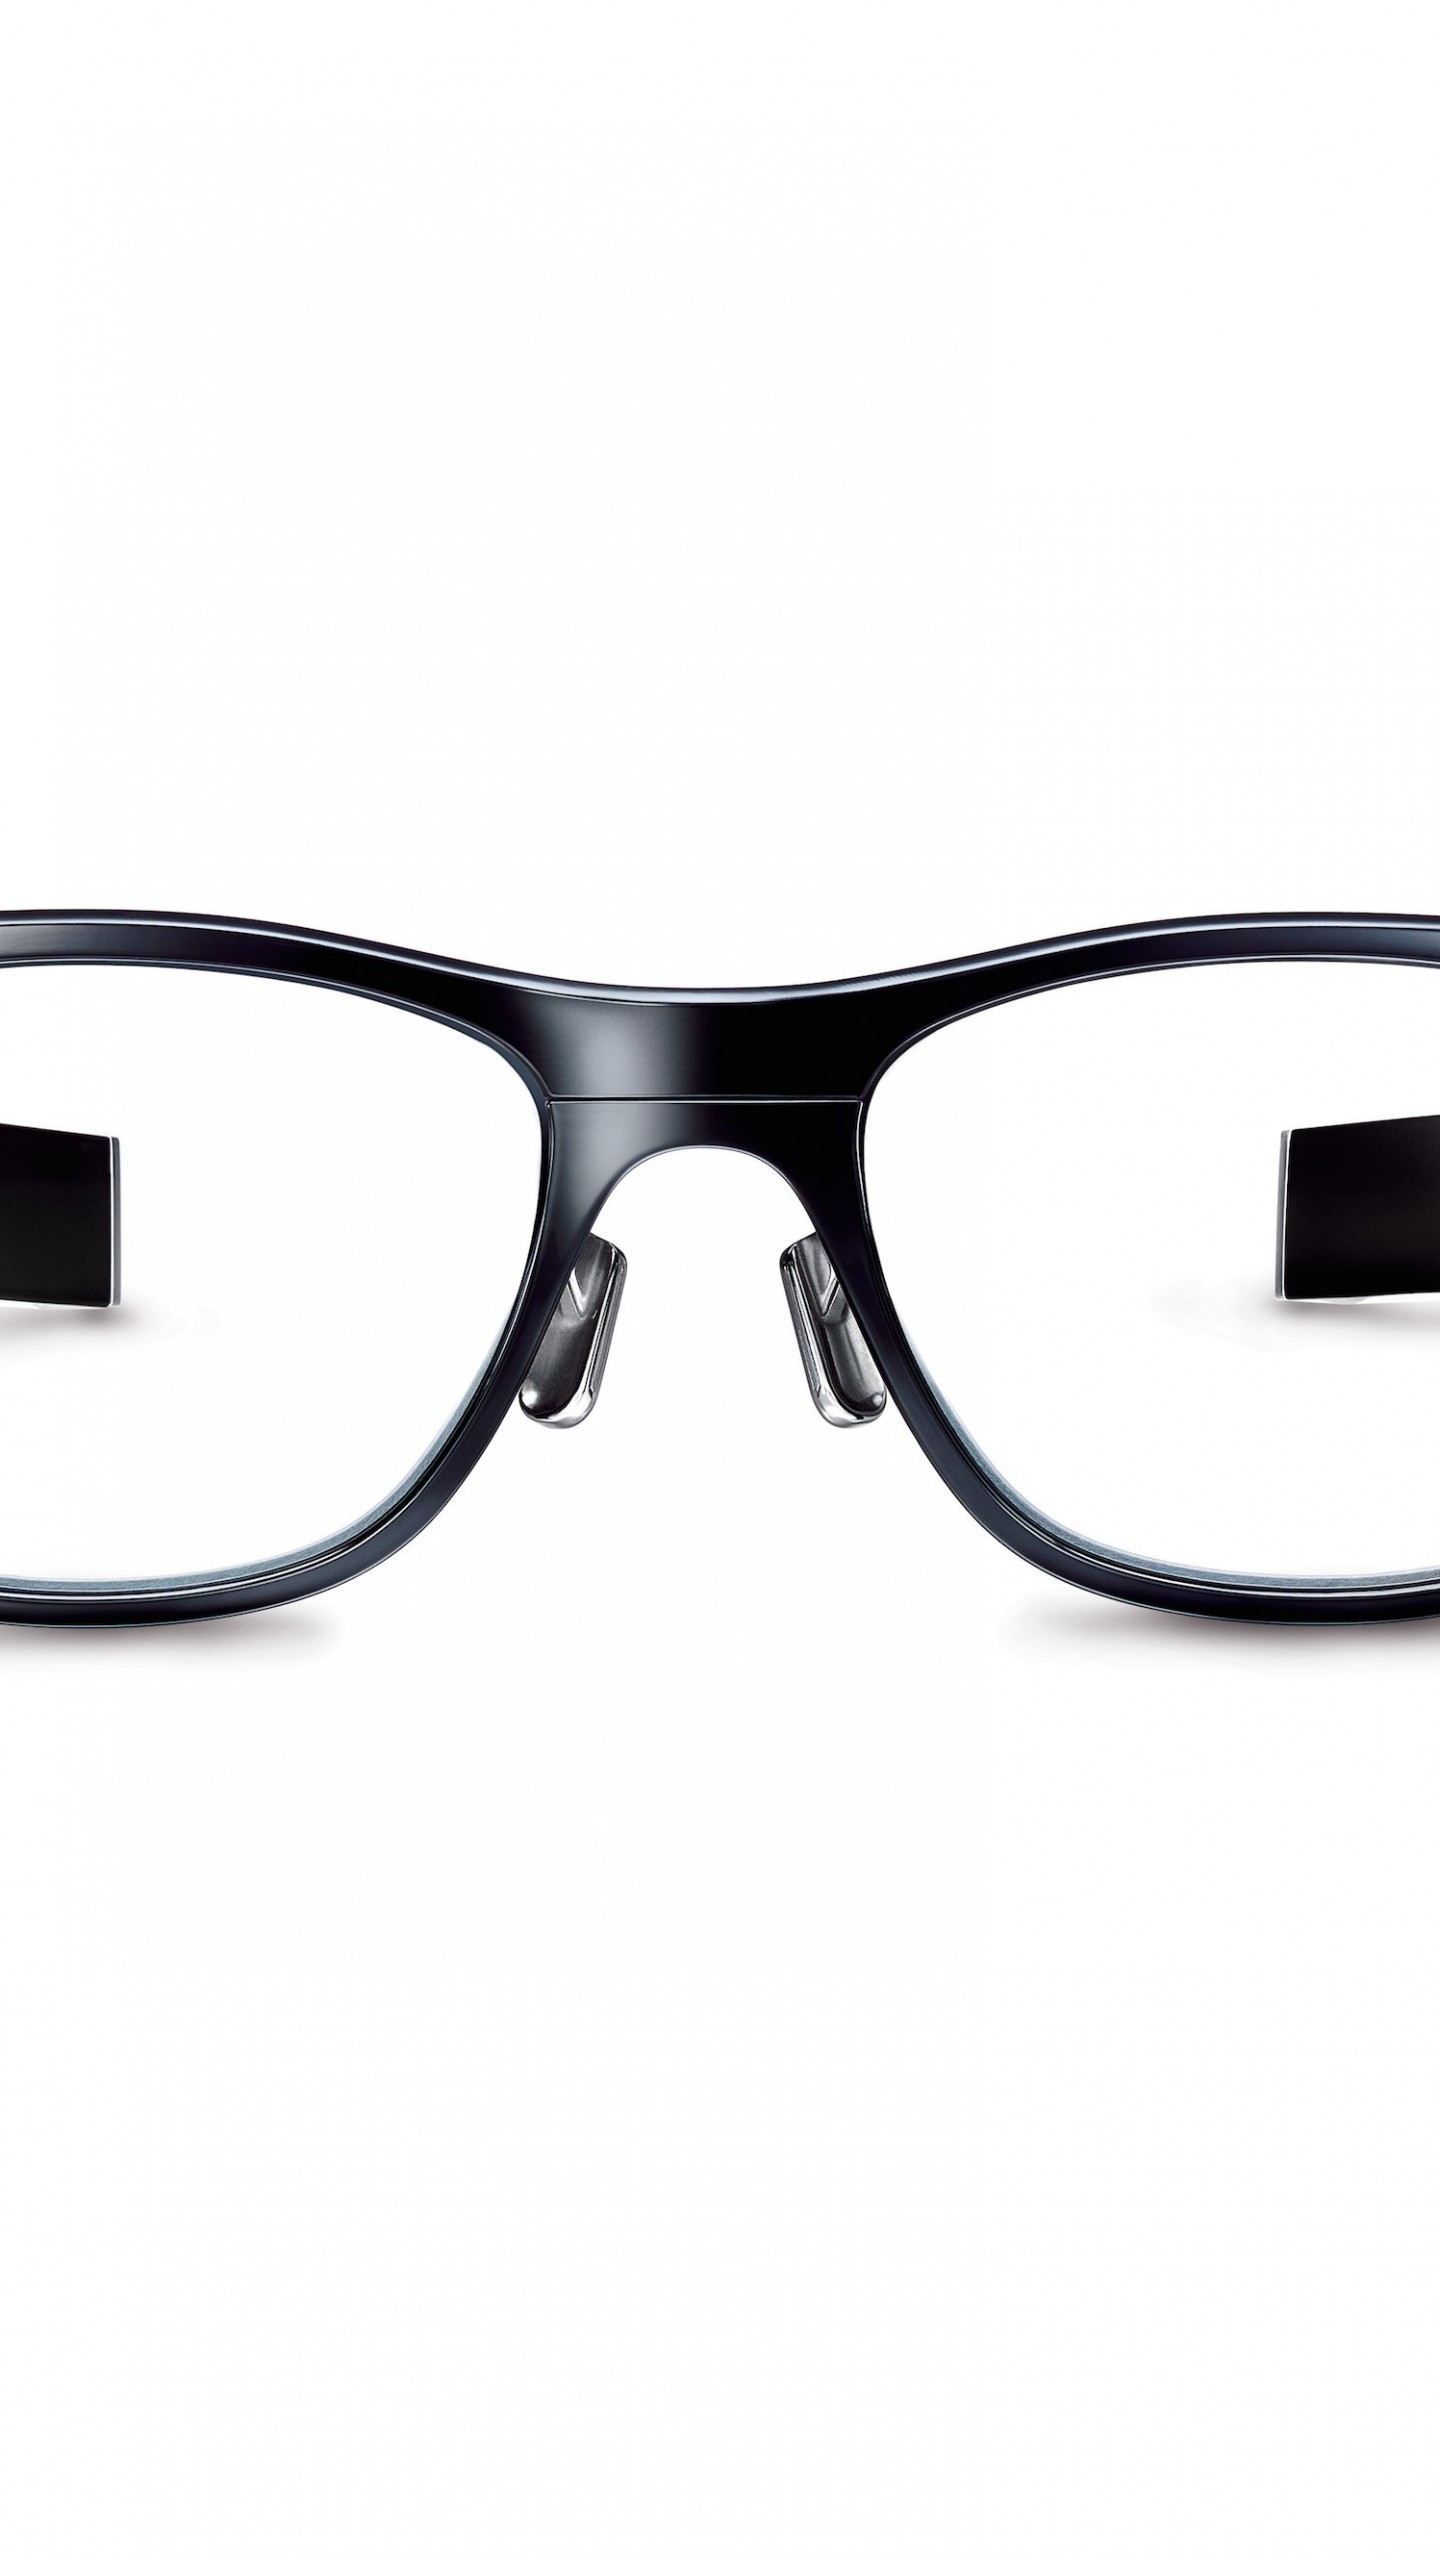 Jins Meme Smart Glasses Wallpaper for Google Nexus 6